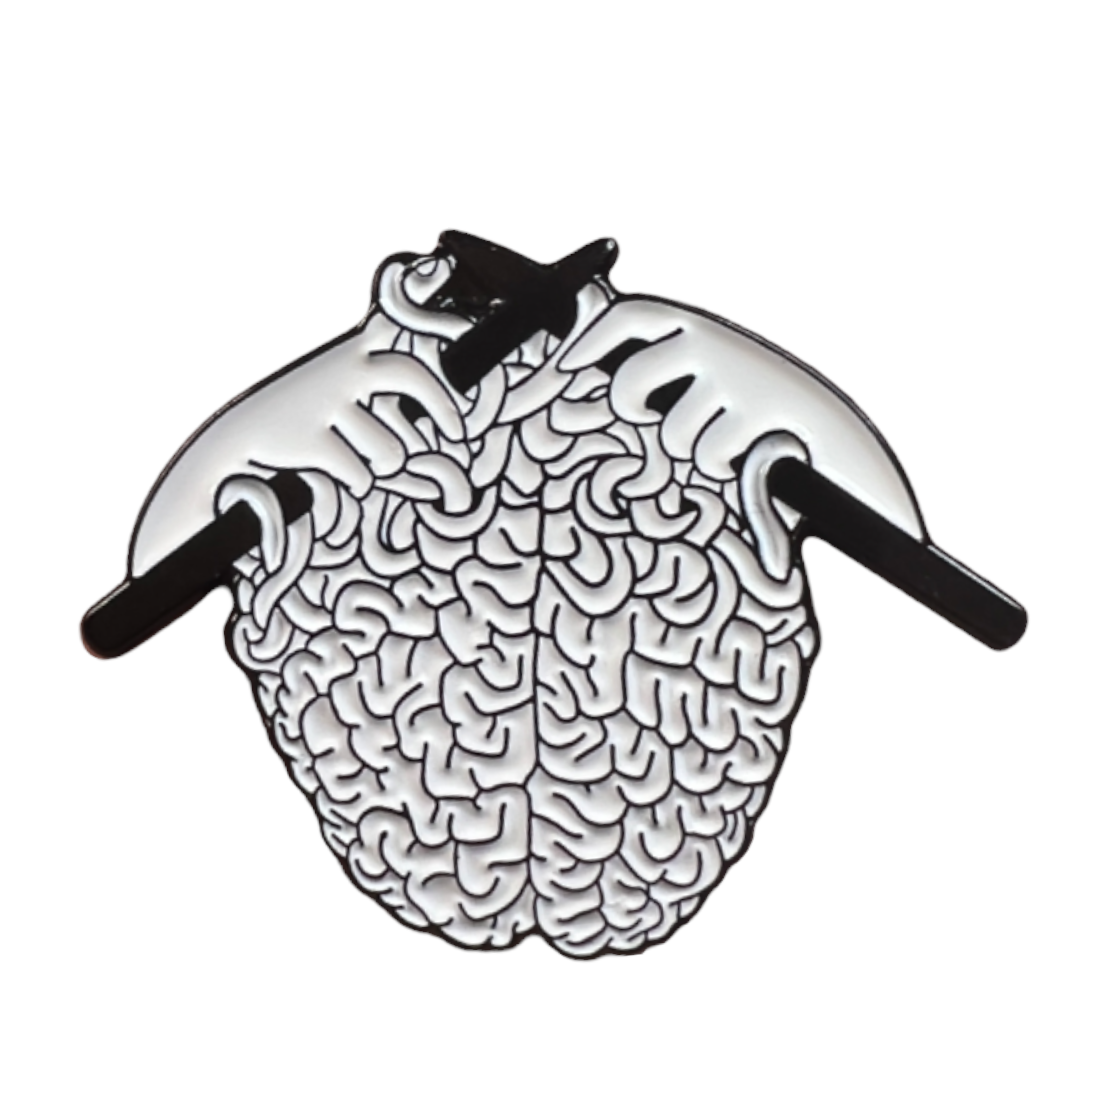 Pin — Knitted Brain  SPIRIT SPARKPLUGS Knitted Brain  